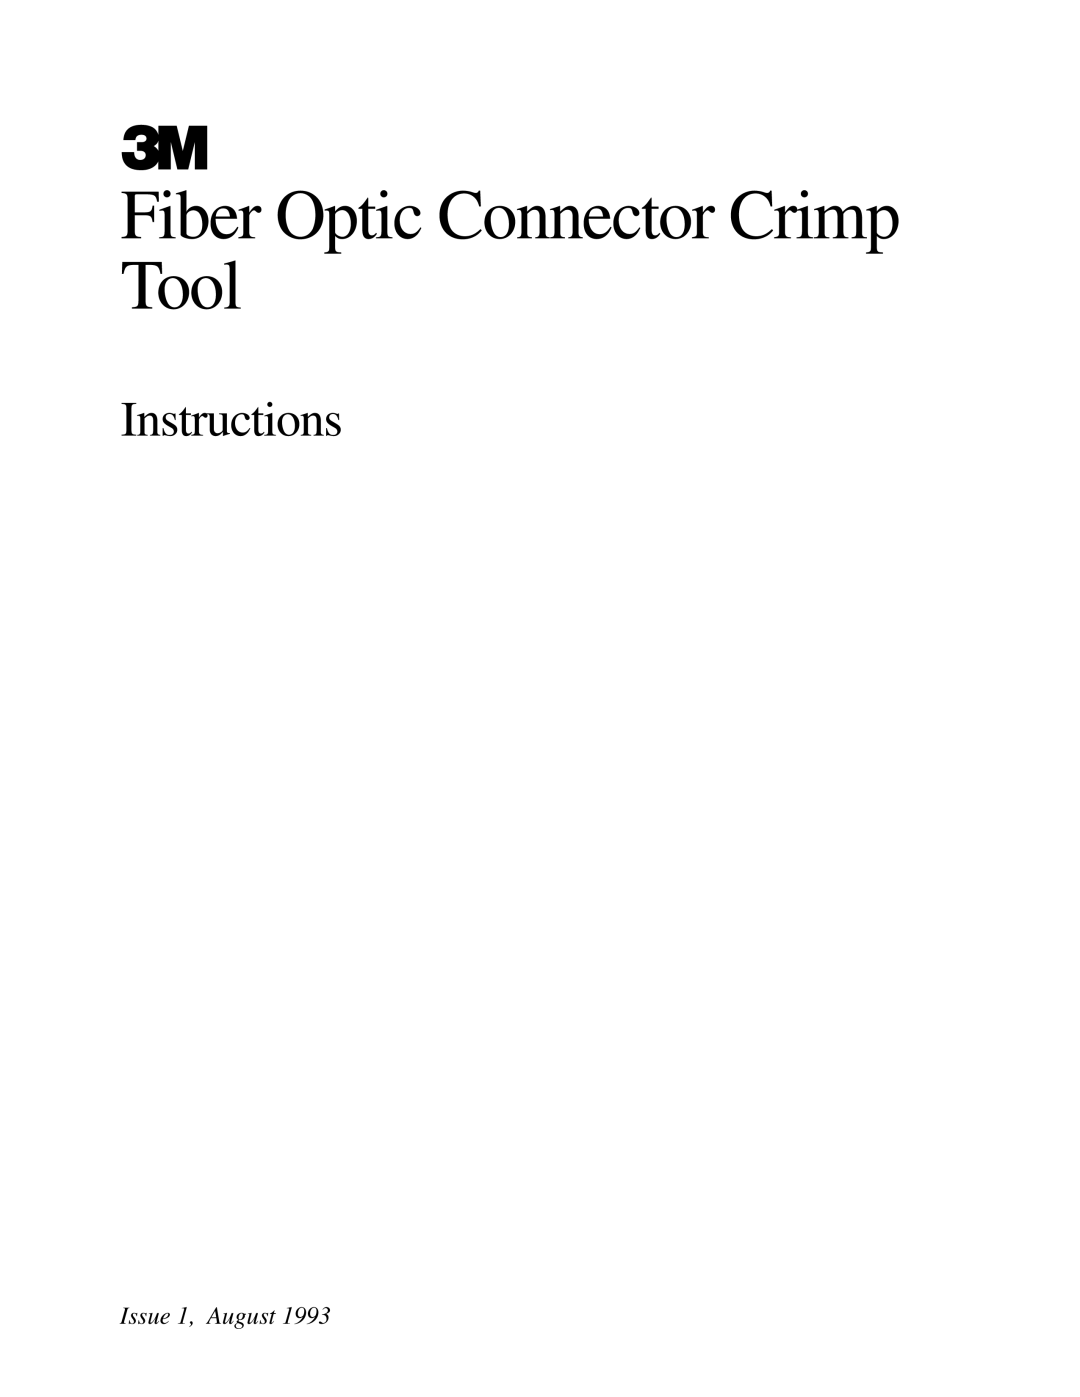 3M Fiber Optic Connector Crimp Tool manual Instructions, Issue 1, August 